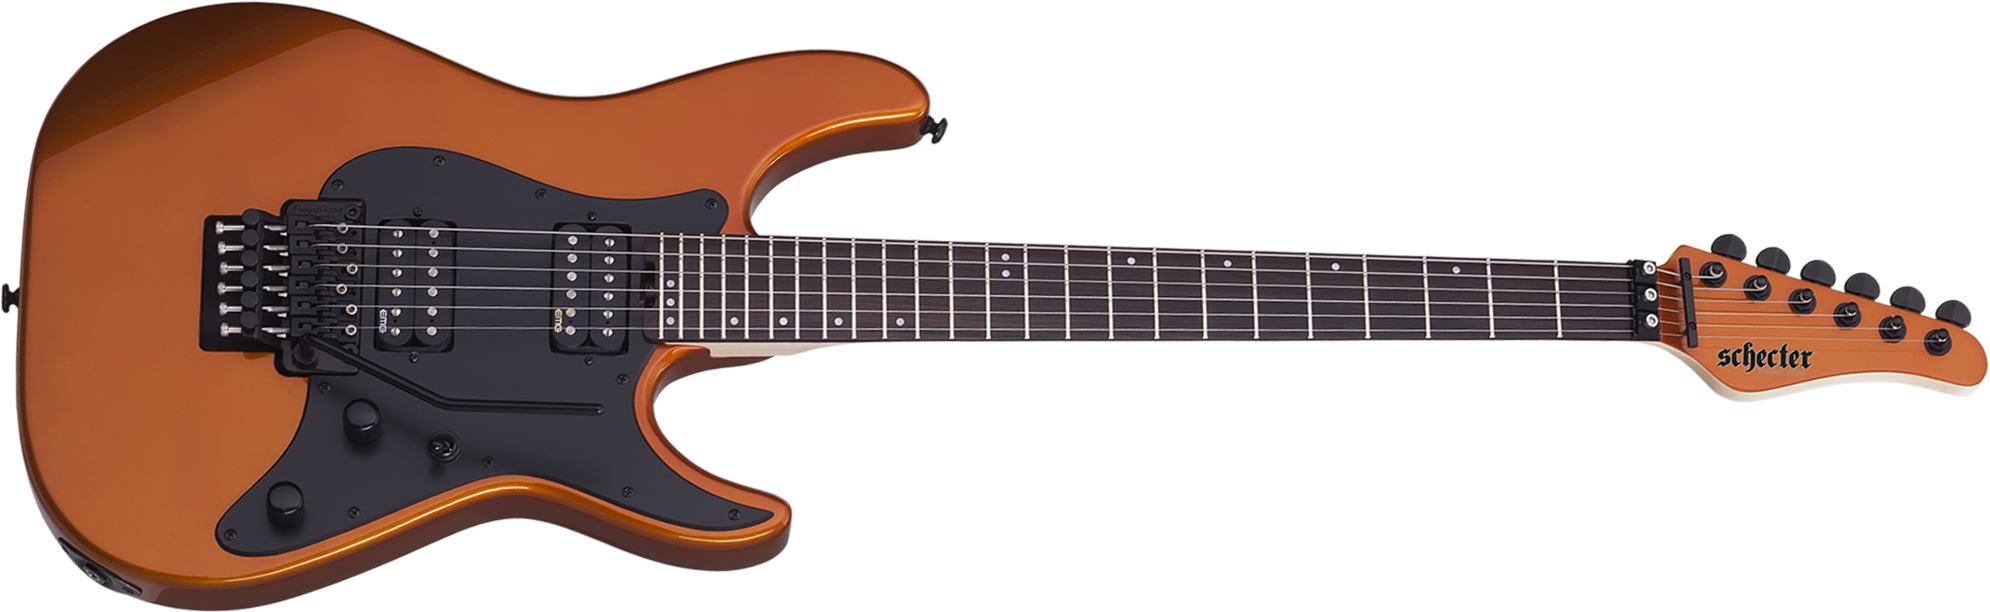 Schecter Sun Valley Super Shredder Fr 2h Emg Rw - Lambo Orange - Tel shape electric guitar - Main picture